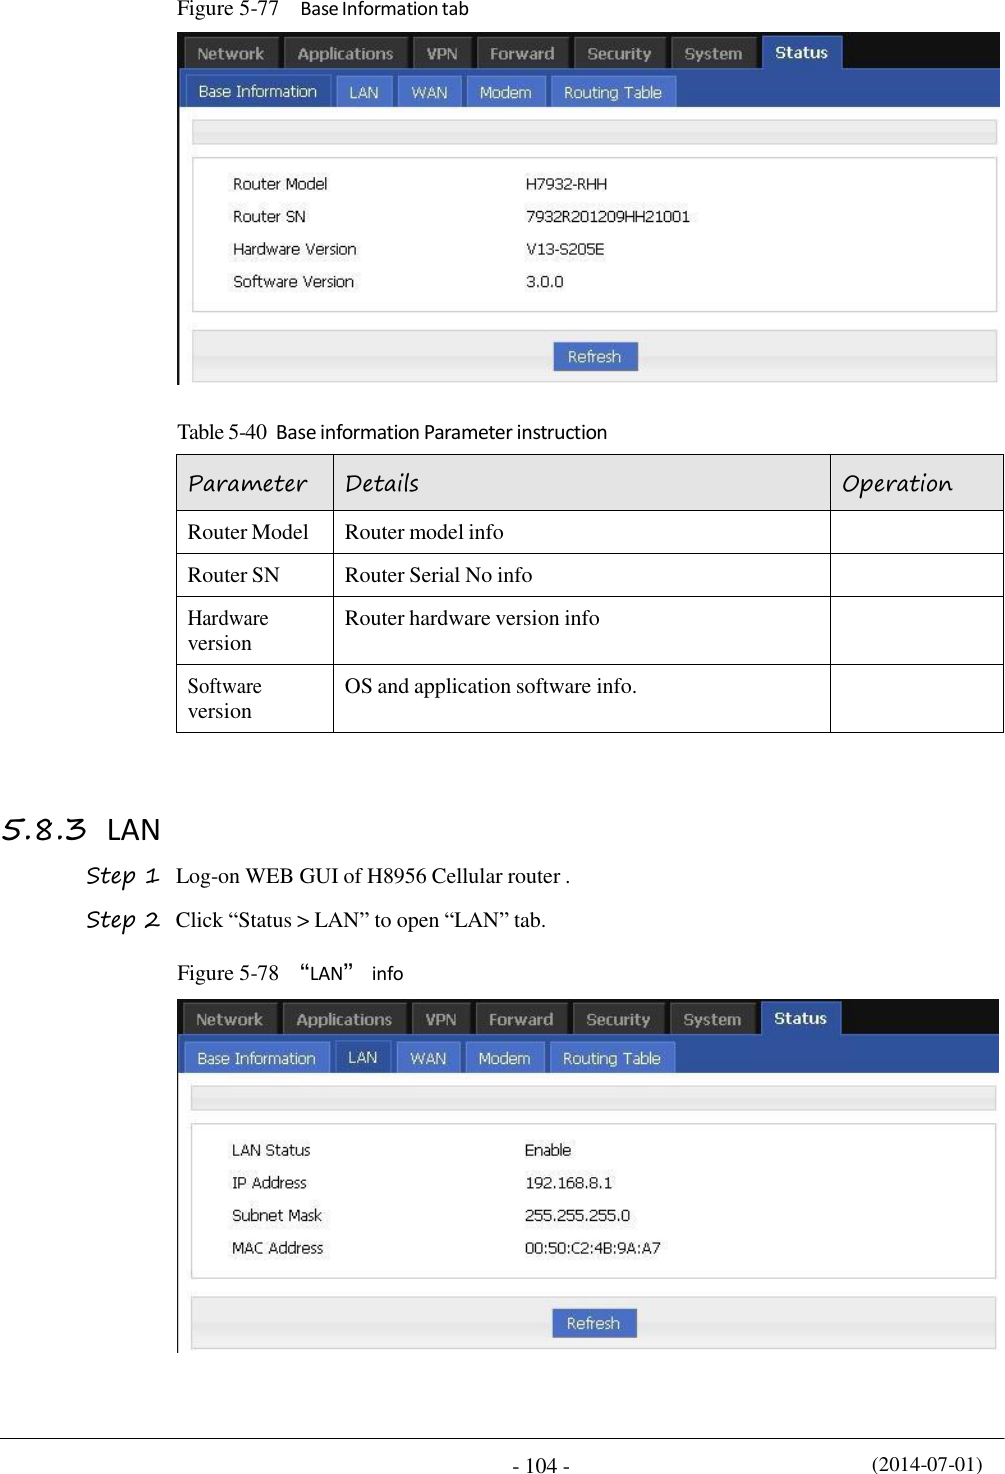 (2014-07-01) - 104 - Figure 5-77  Base Information tab      Table 5-40 Base information Parameter instruction  Parameter Details Operation Router Model Router model info  Router SN Router Serial No info  Hardware version Router hardware version info  Software version OS and application software info.     5.8.3 LAN Step 1  Log-on WEB GUI of H8956 Cellular router . Step 2  Click “Status &gt; LAN” to open “LAN” tab.  Figure 5-78  “LAN” info   